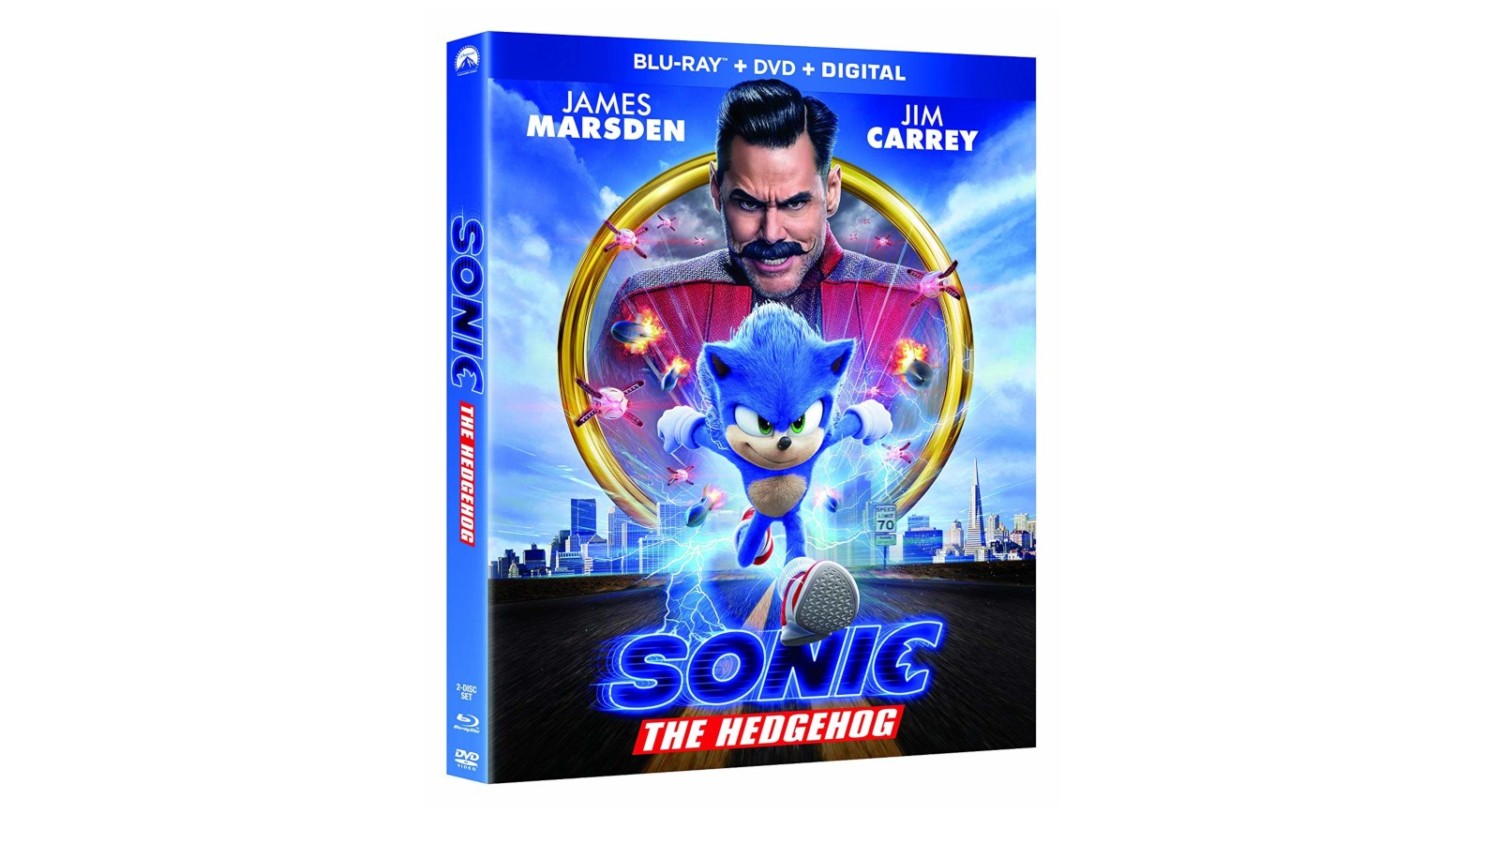  Sonic the Hedgehog [Blu-ray] Starring Jim Carrey